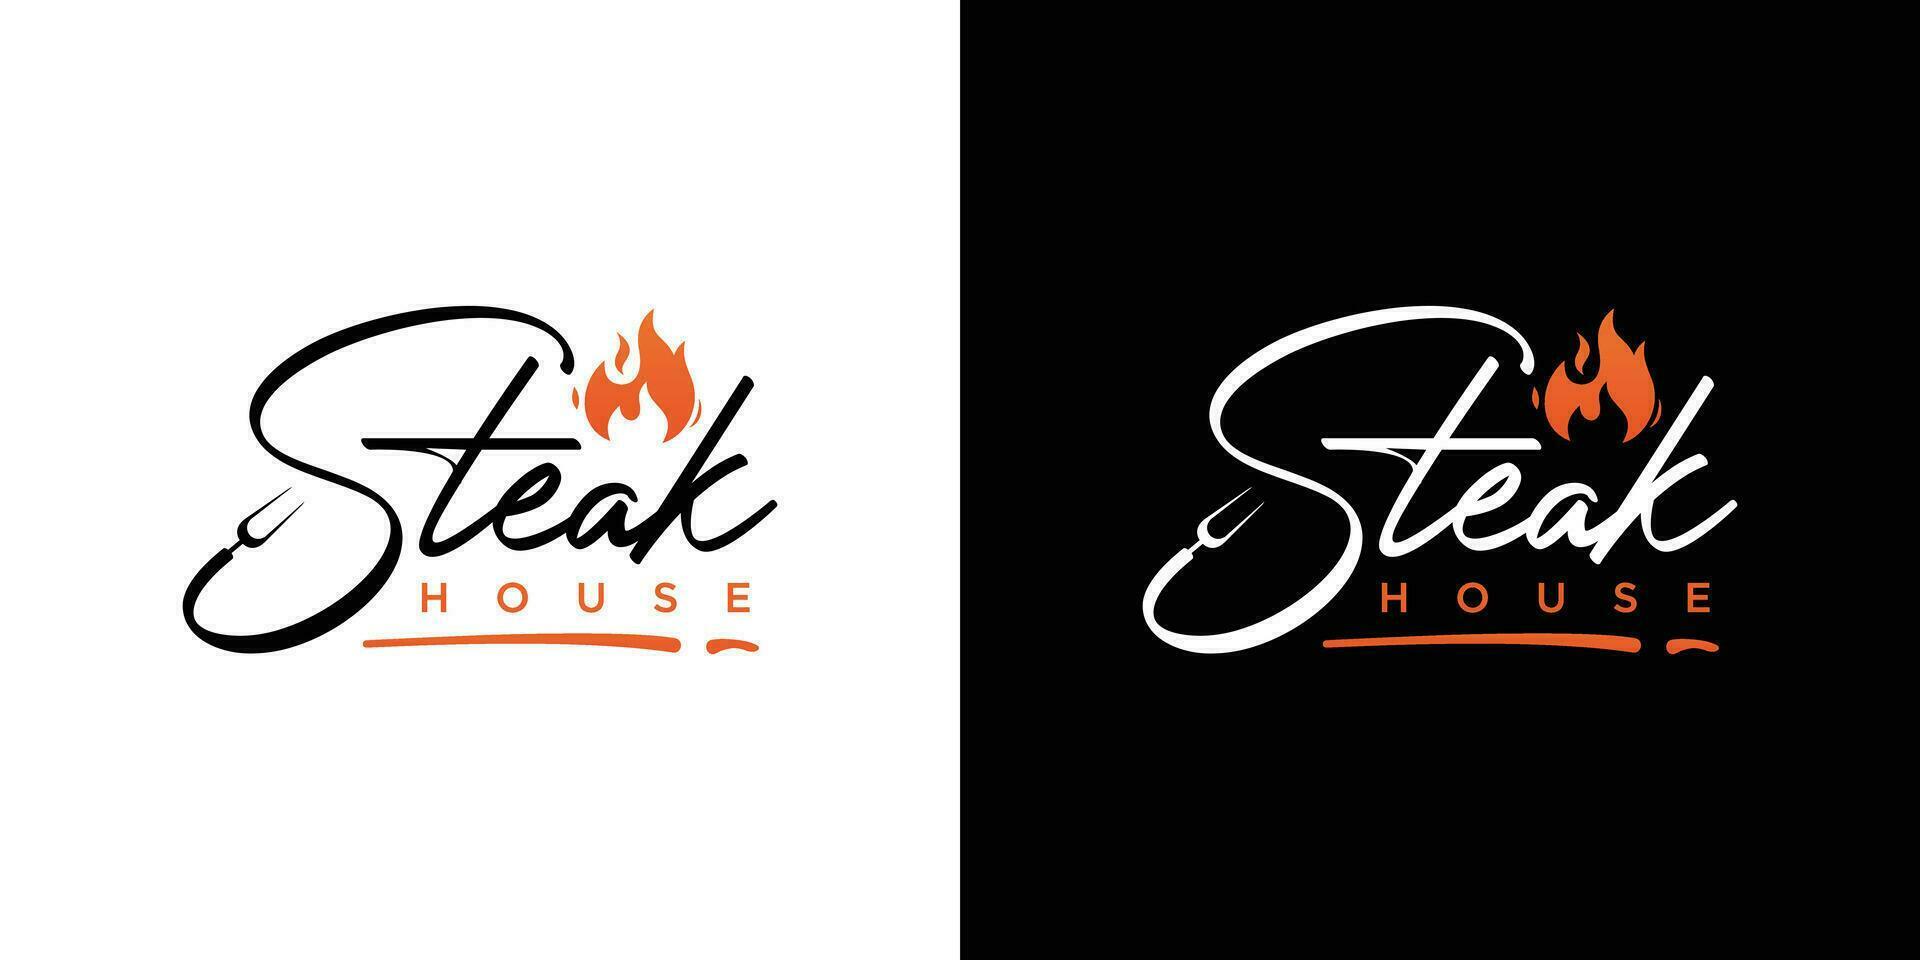 vintage steak house logo. retro style grill restaurant emblem. vector illustration